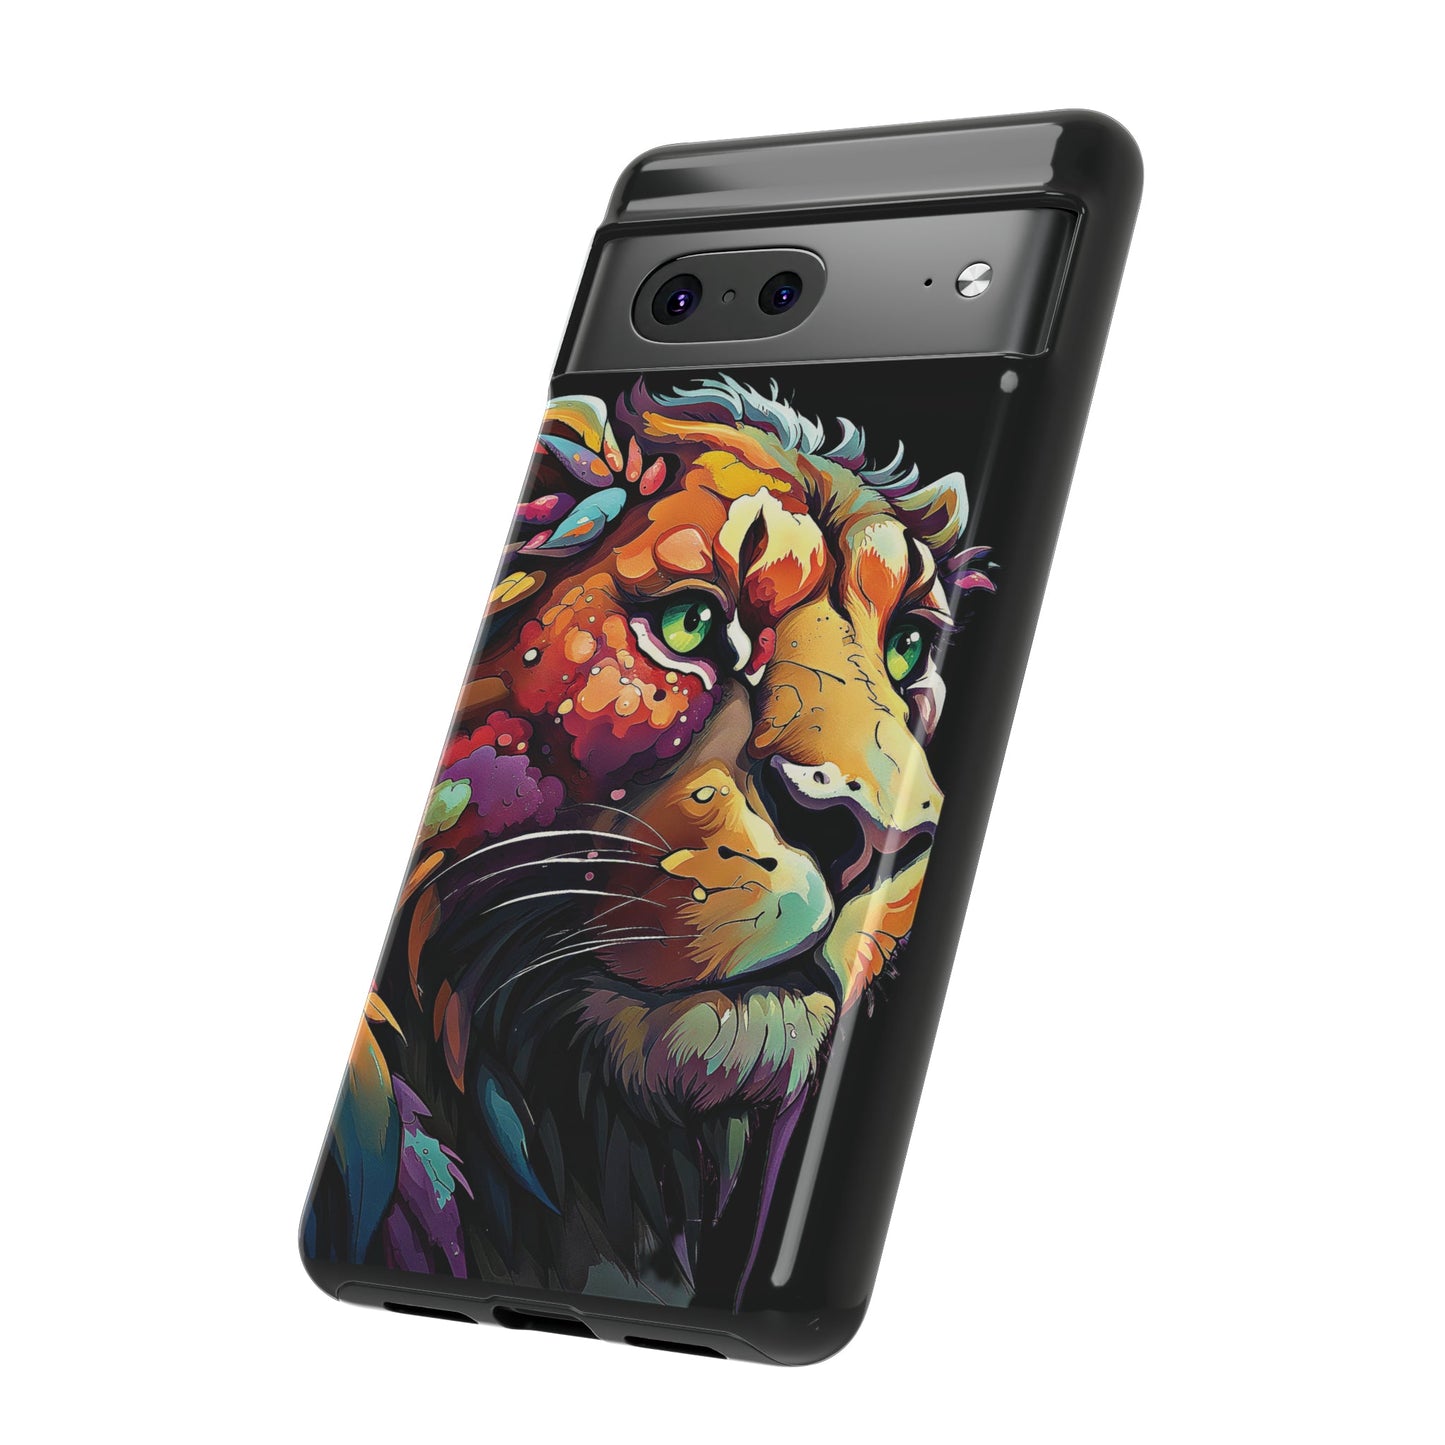 Colorful Lioness Tough Phone Case